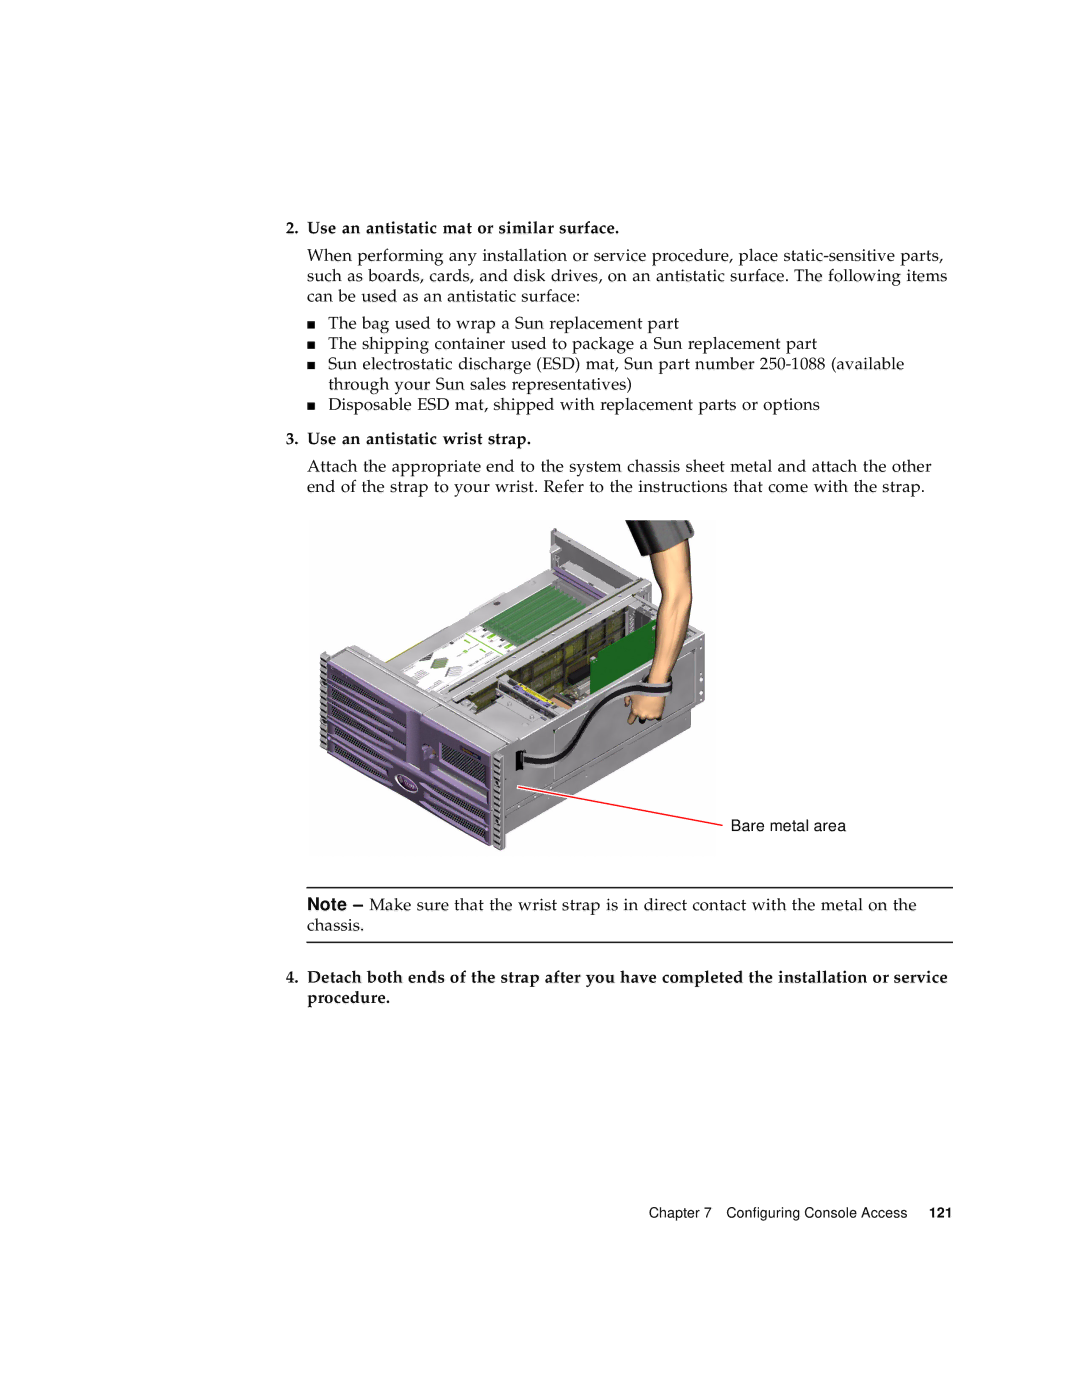 Sun Microsystems V490 manual Use an antistatic mat or similar surface, Use an antistatic wrist strap 